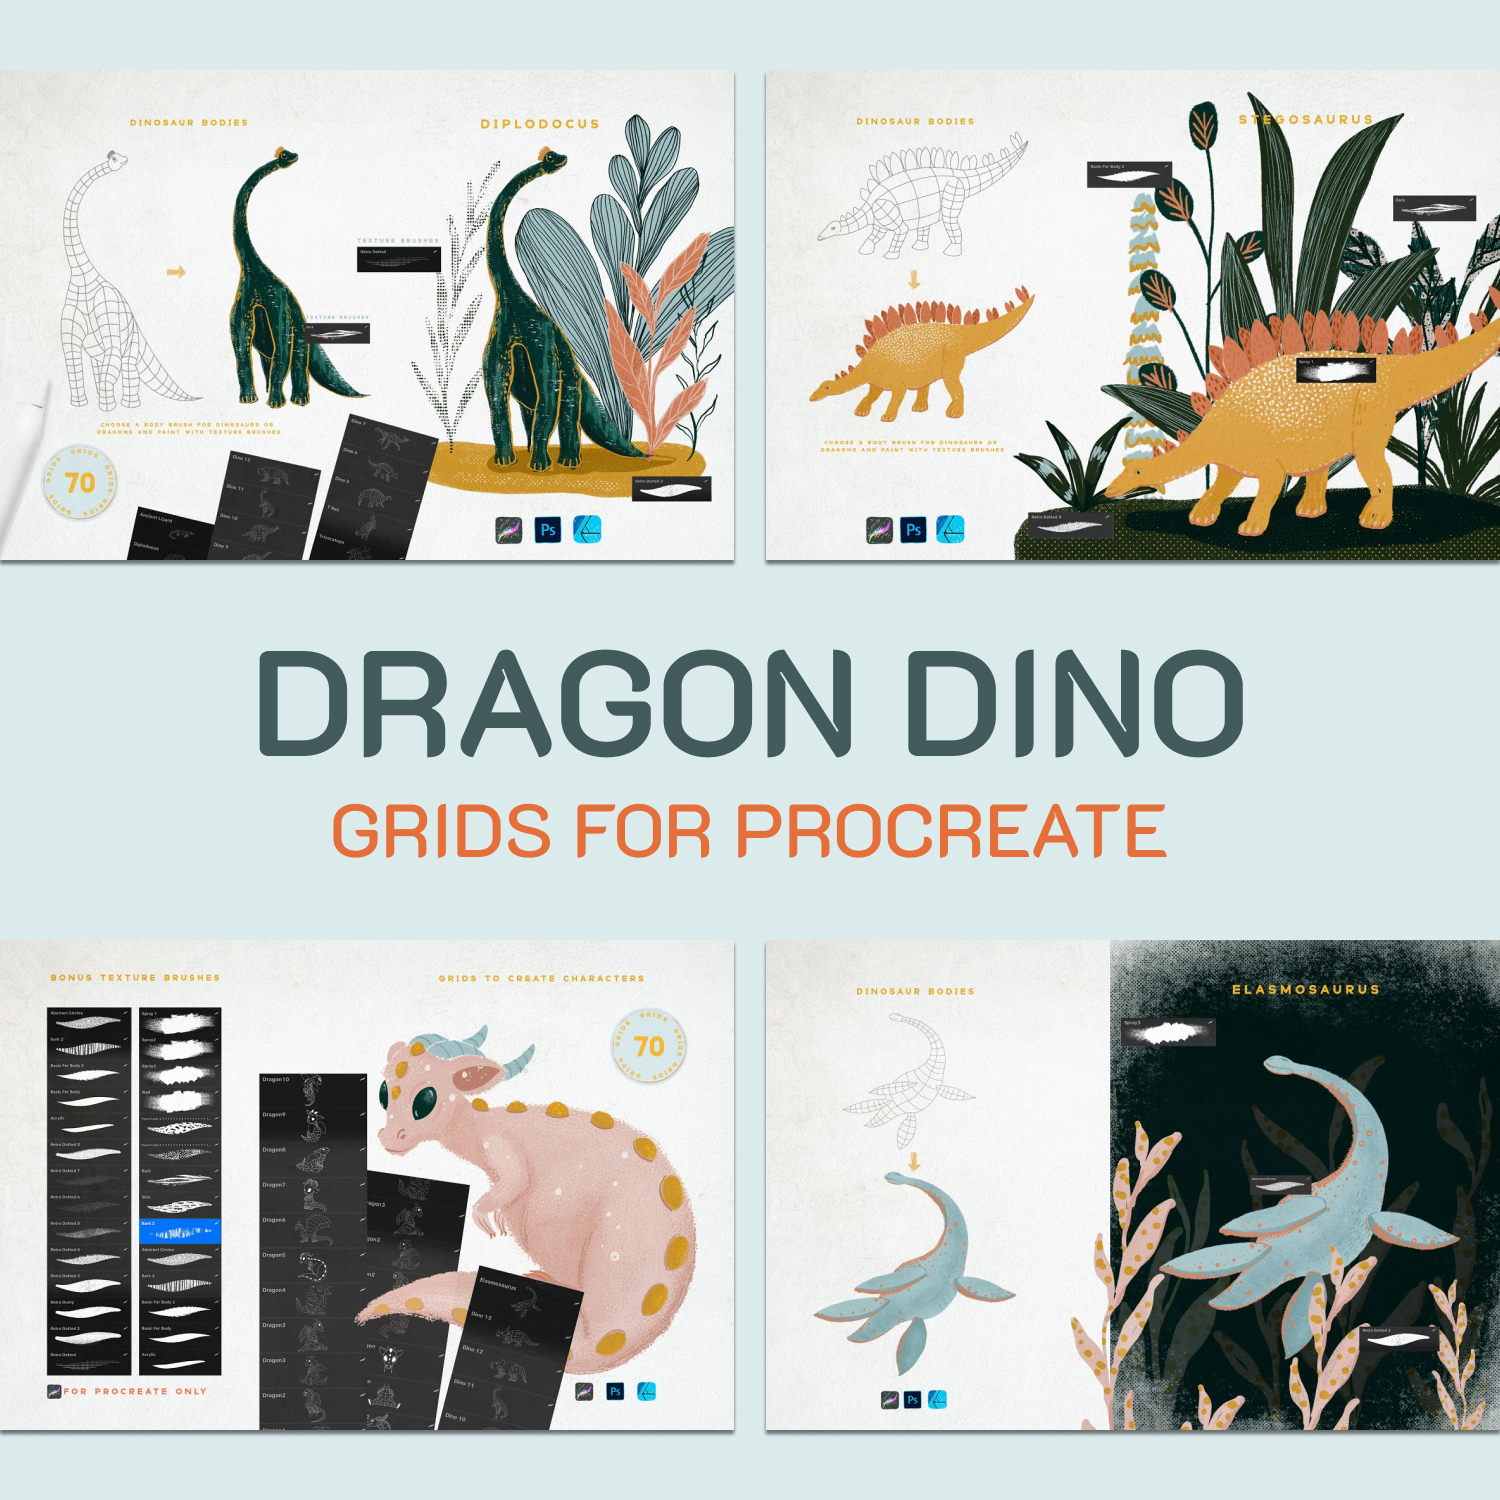 Preview dragon dino grids for procreate.